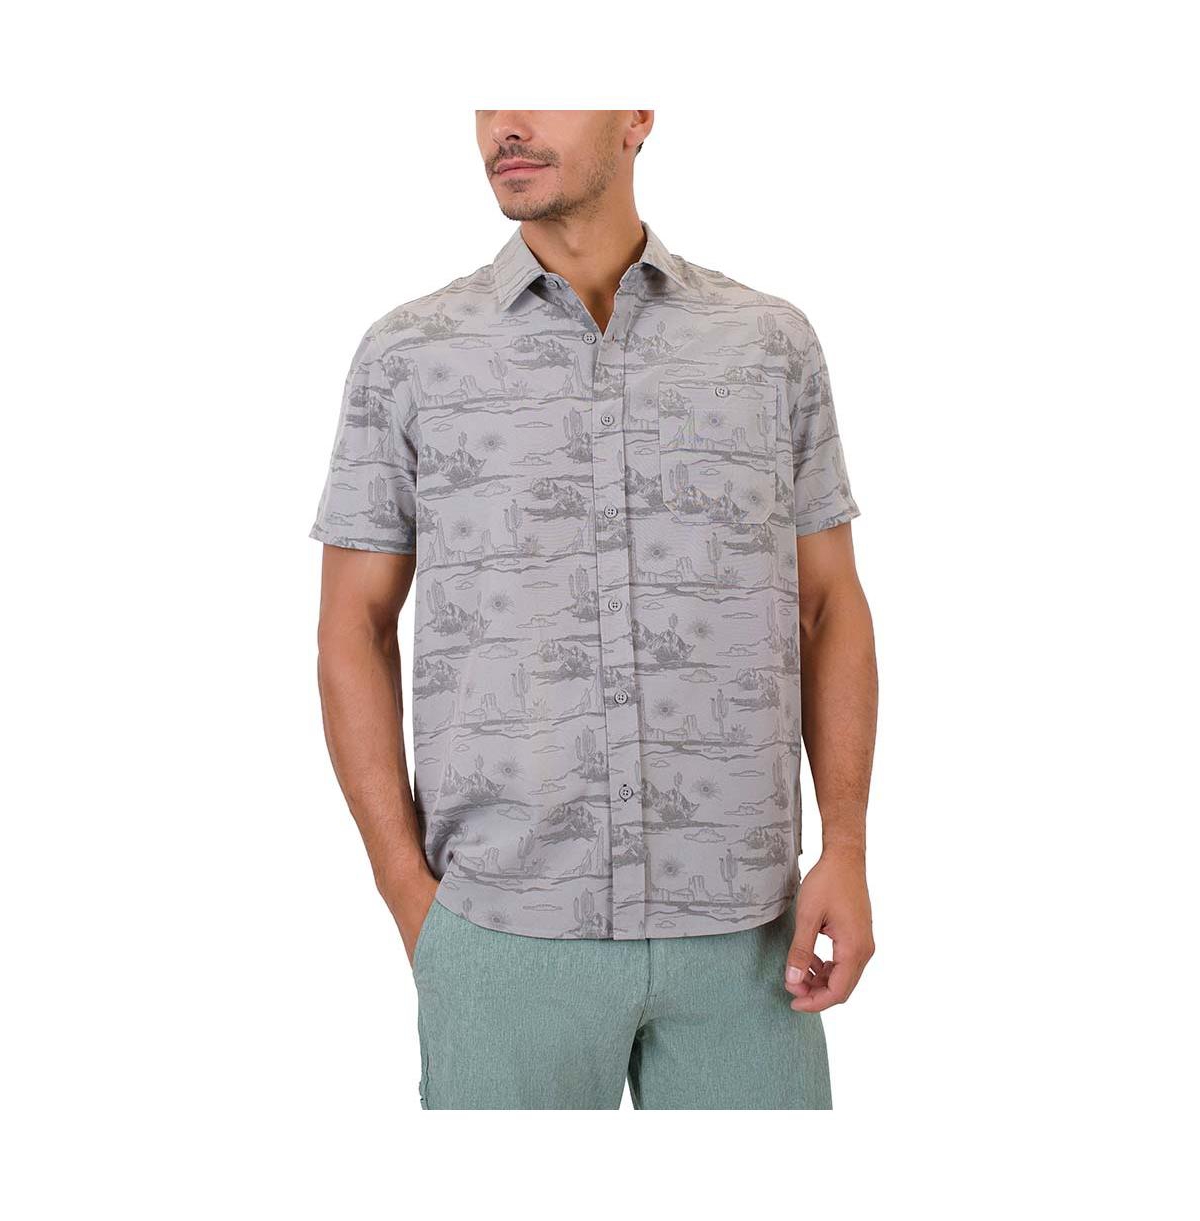 Men's One-Pocket Sun Protection Button Down Shirt - Steel blue ocean waves